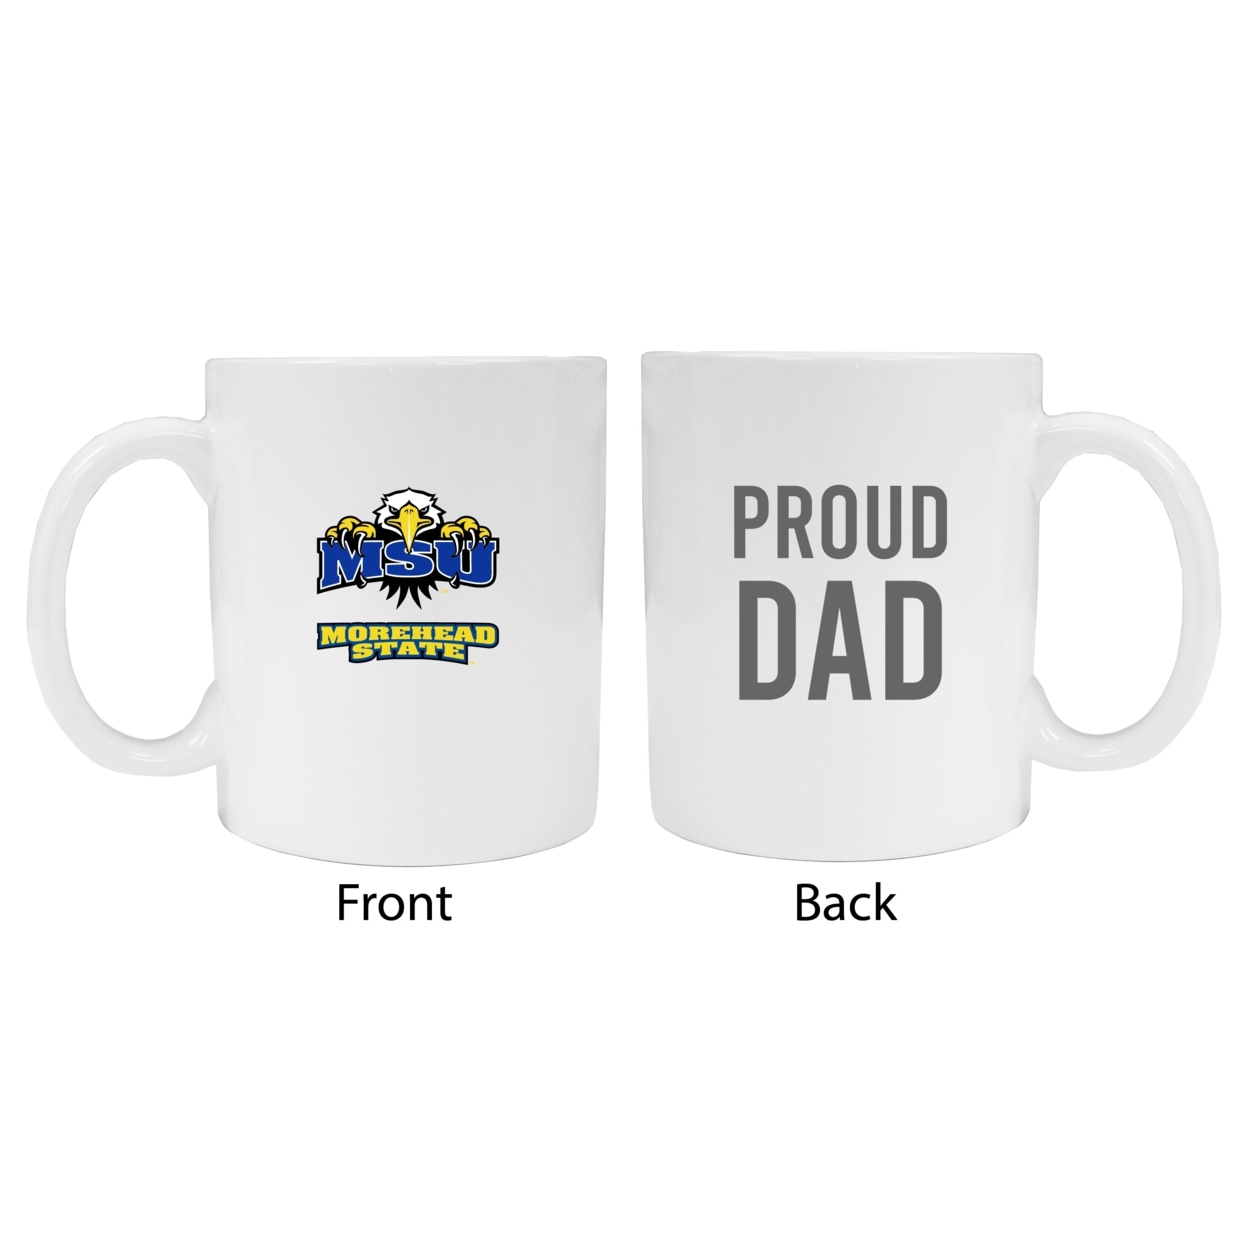 Morehead State University Proud Dad Ceramic Coffee Mug - White (2 Pack)